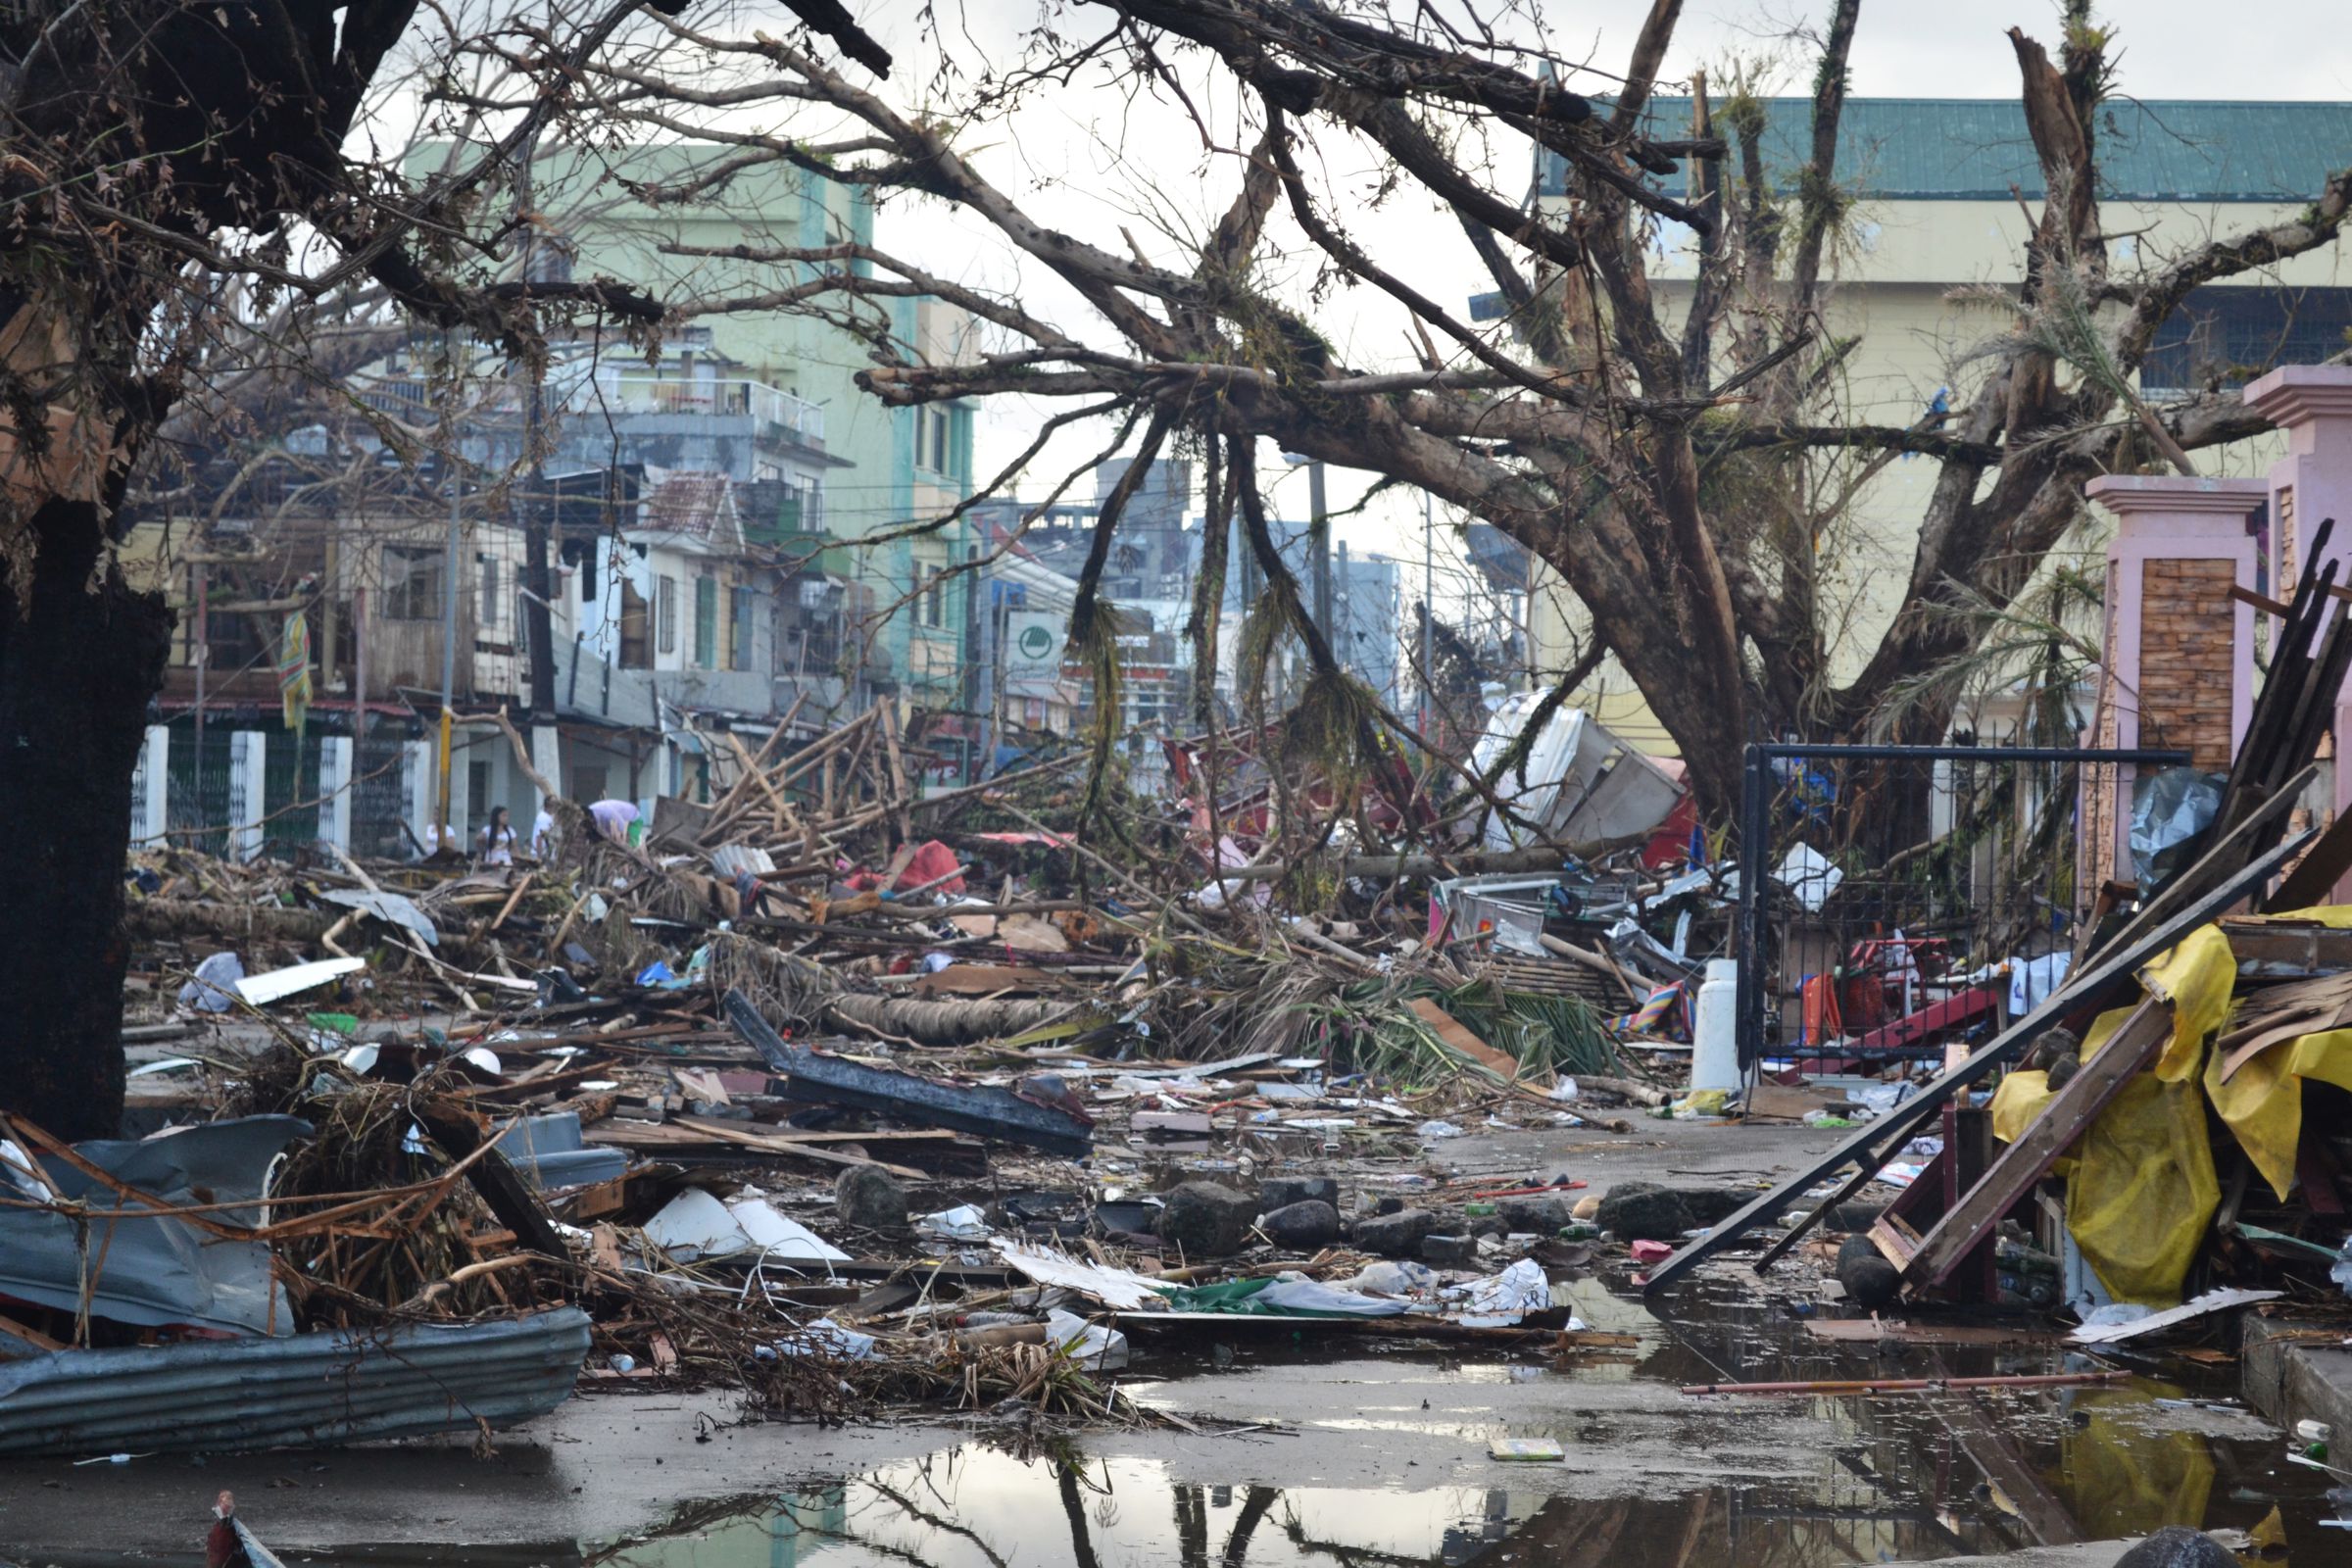 Destruction from Typhoon Haiyan in 2013.